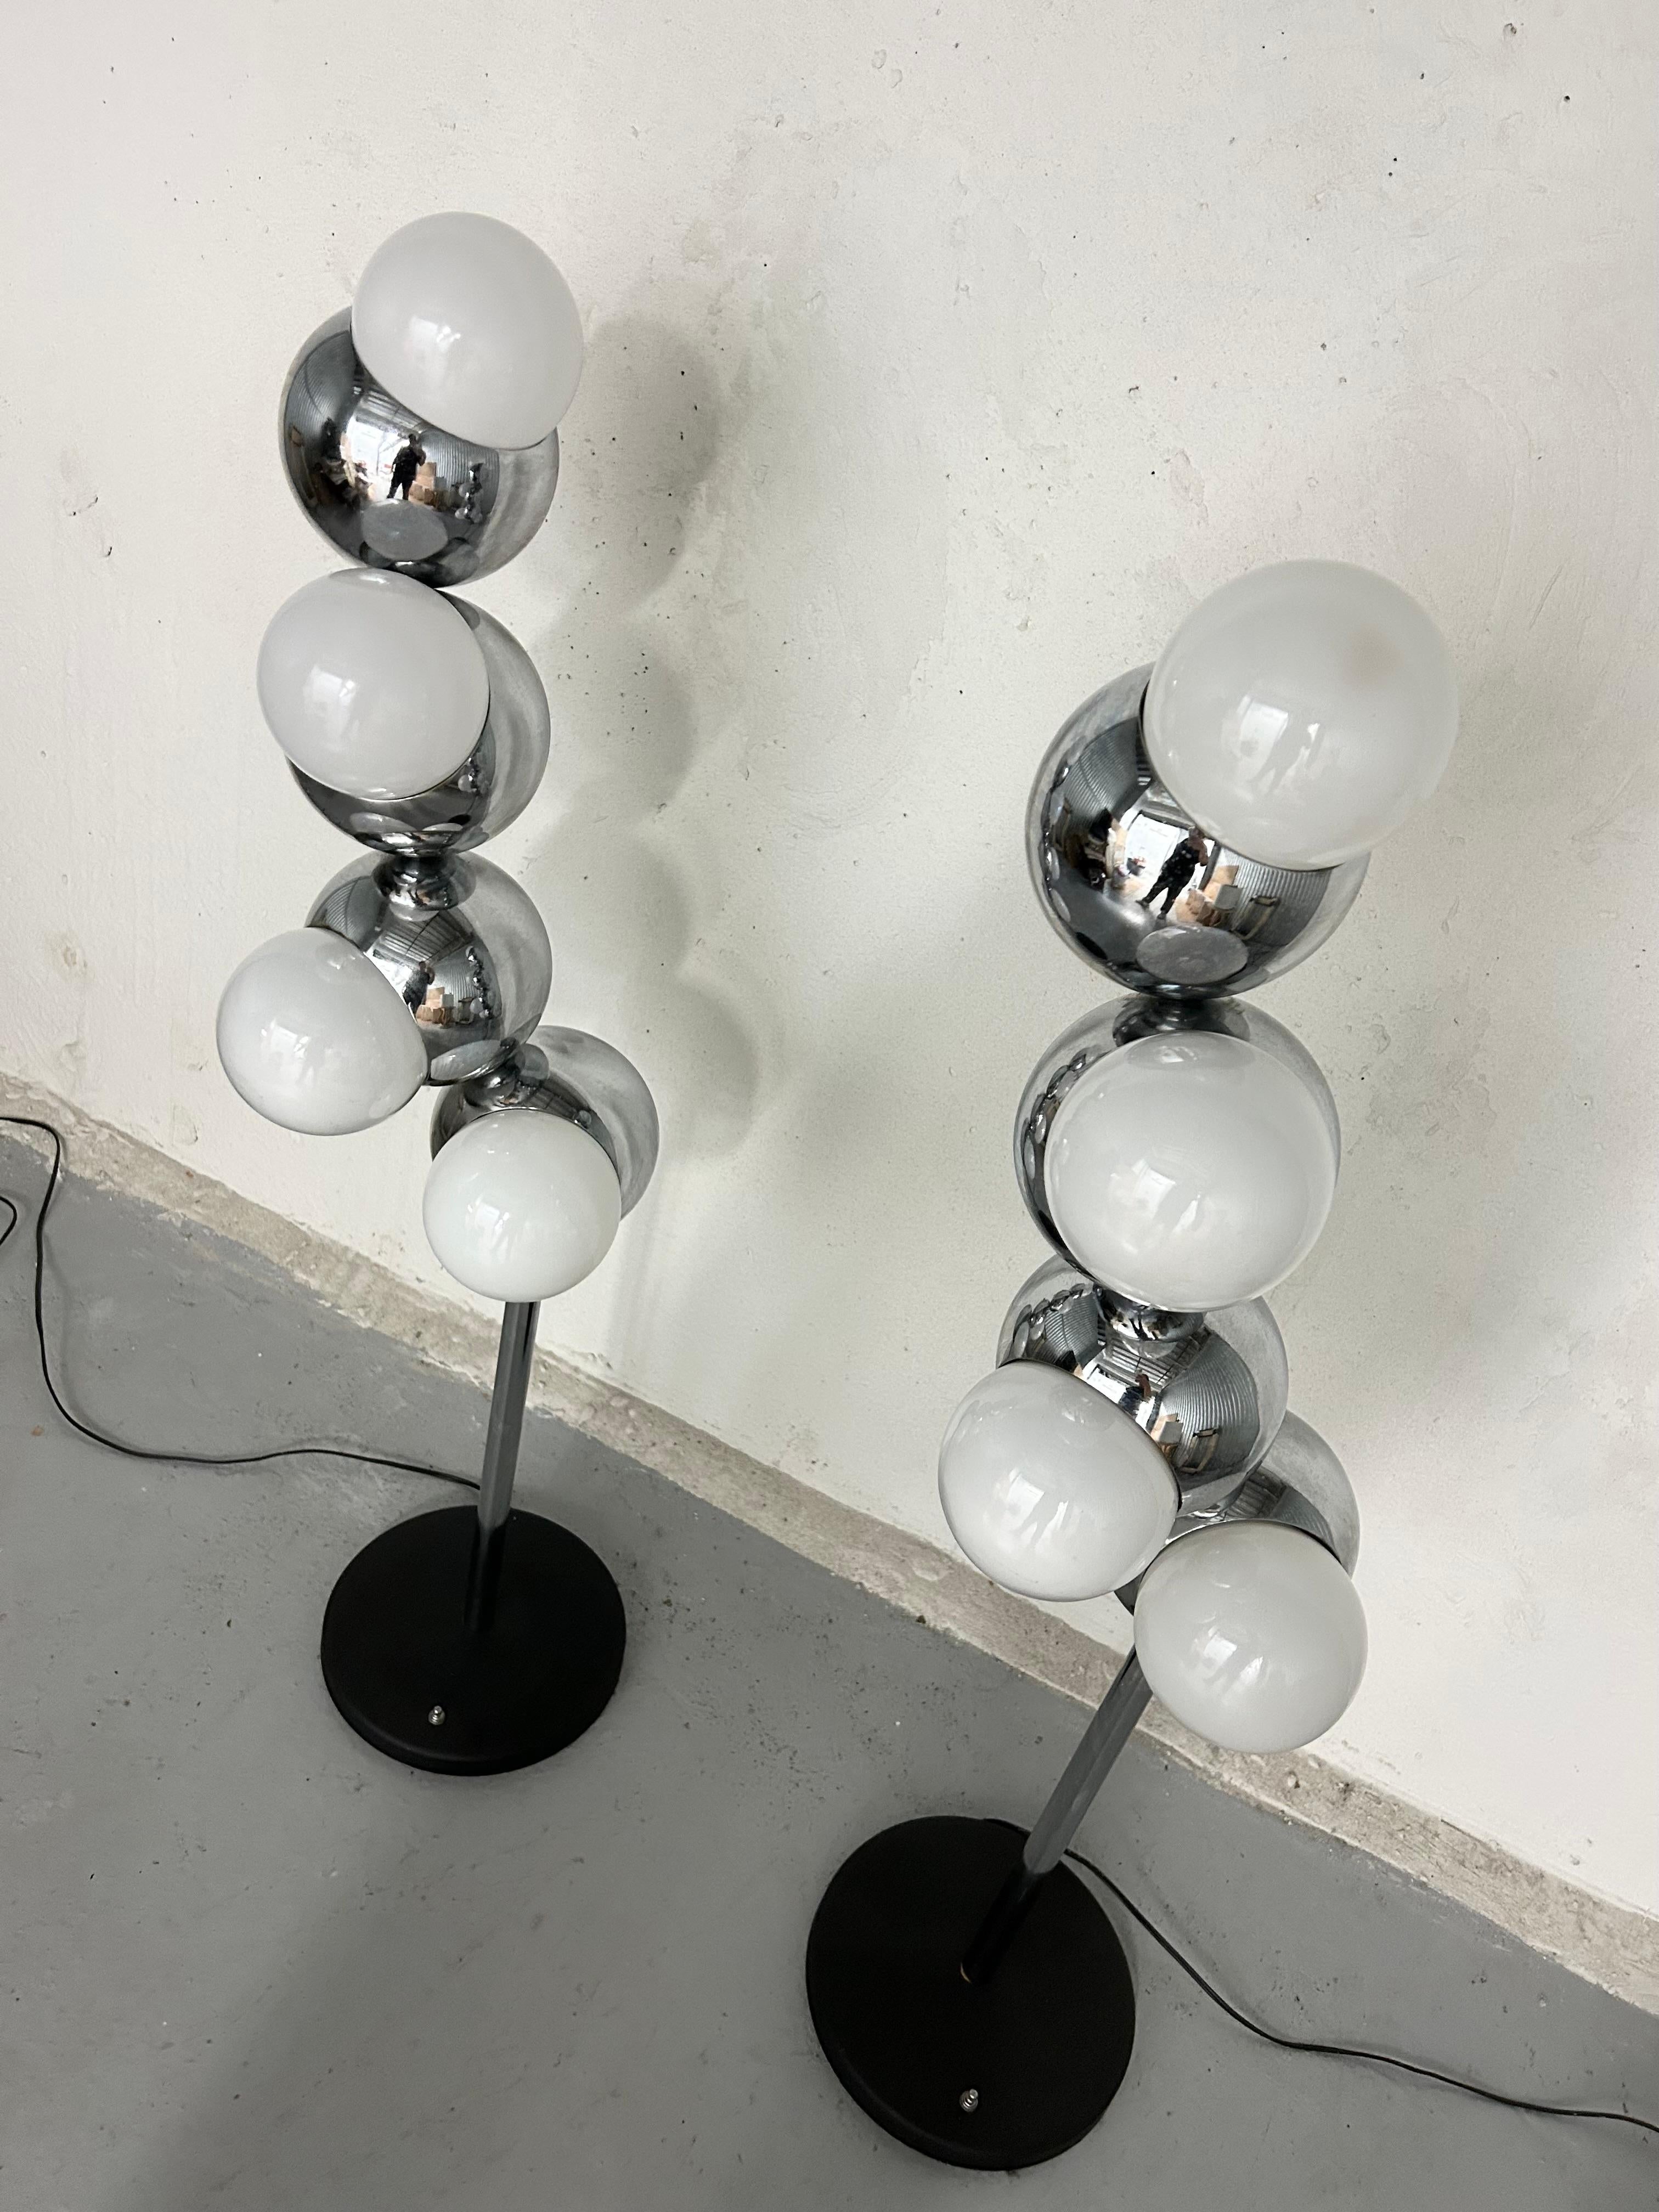 Vintage 1960s space age floor lamps. Attributed to Robert Sonneman molecule lamp - 4 chrome molecules holding large bulbs. 3 way switch on black metal base. Minimal wear.

43.5” height
10” base diameter